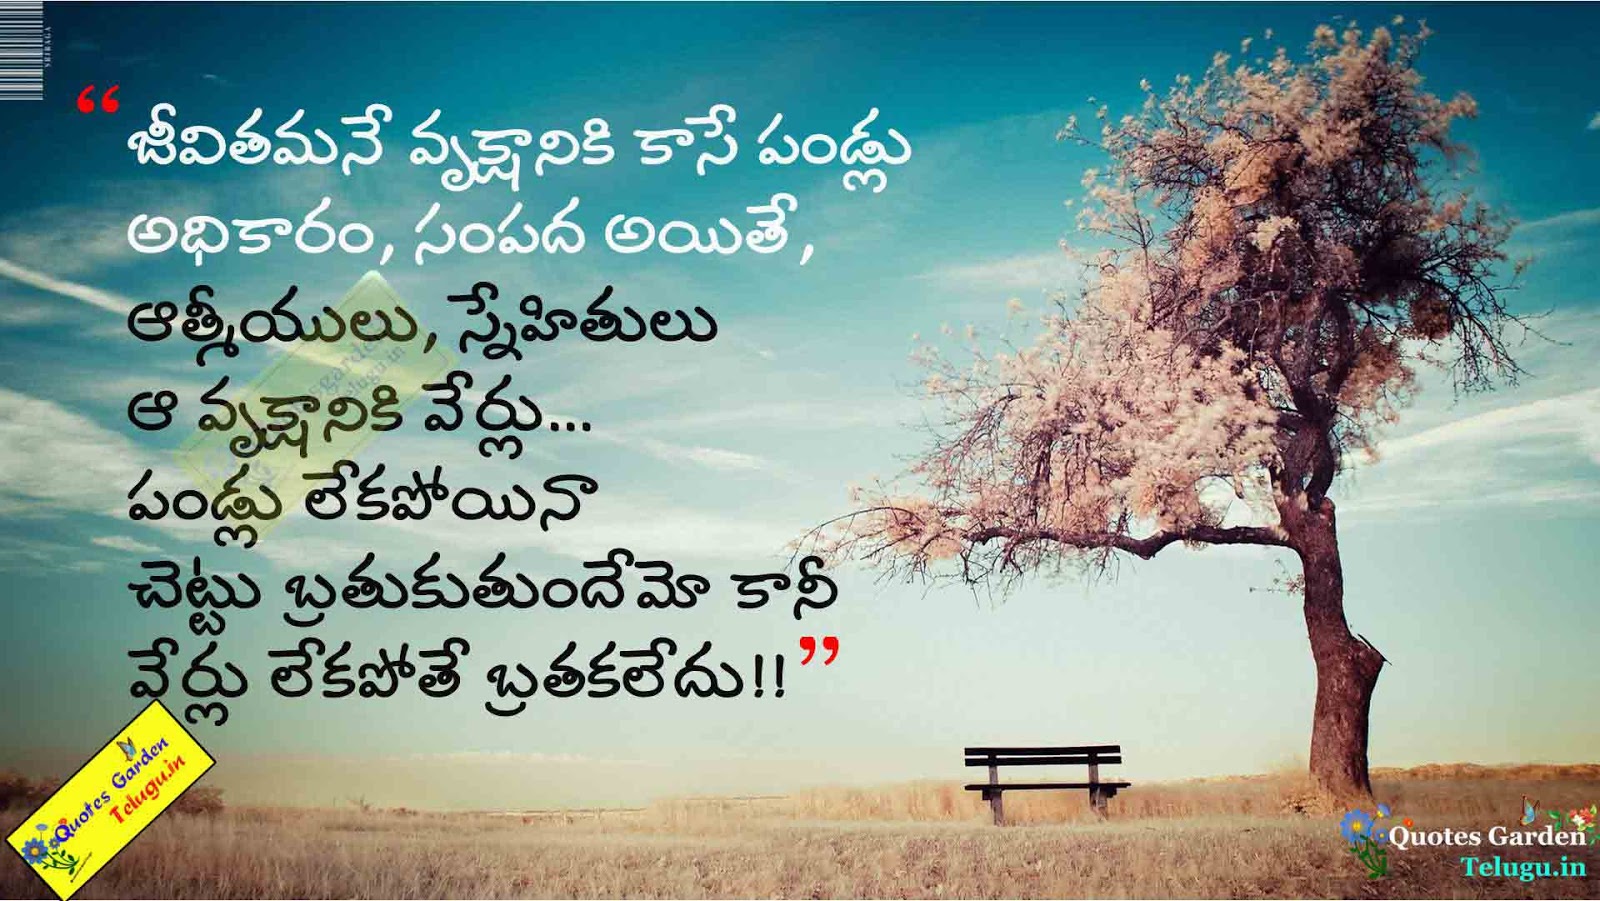 Best Friendship Quotes In Telugu 794 Quotes Garden Telugu